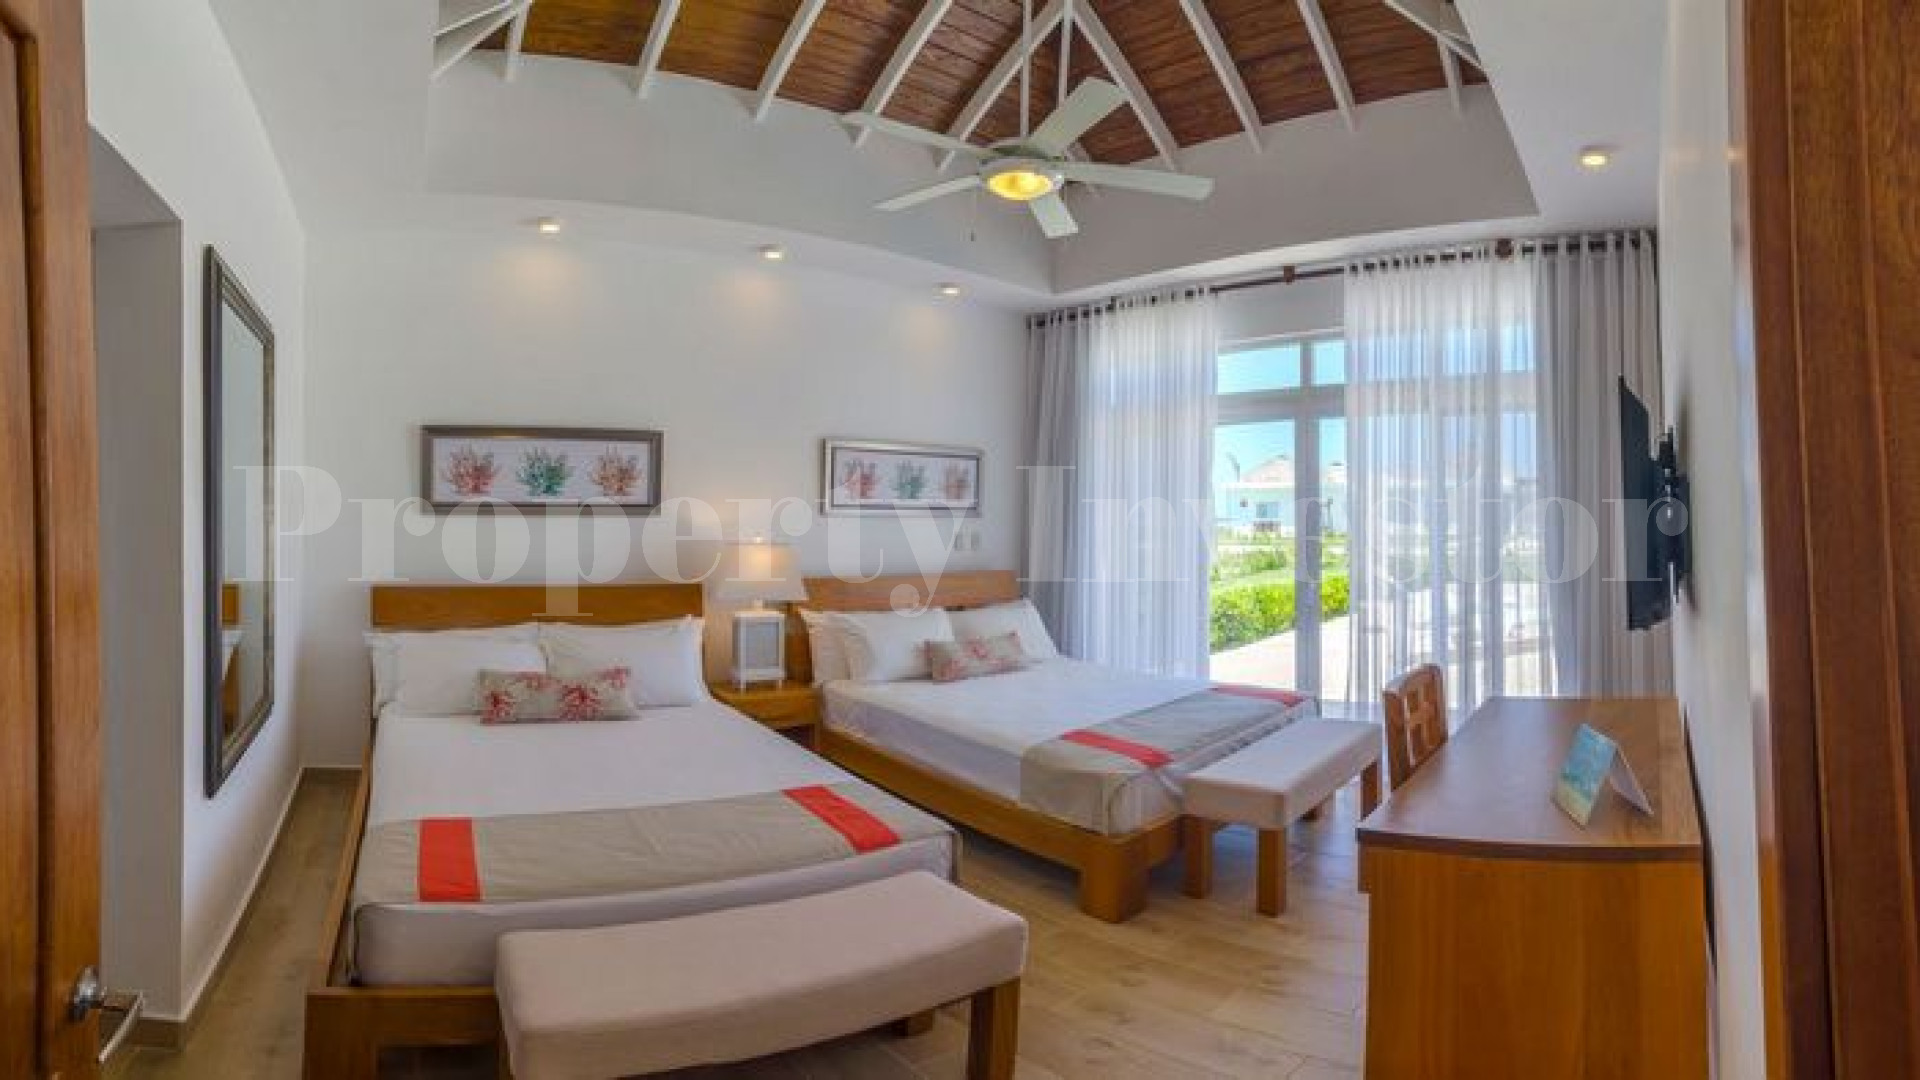 2 Bedroom Oceanview Villa in the Dominican Republic with 30 Year Financing (Villa 13)